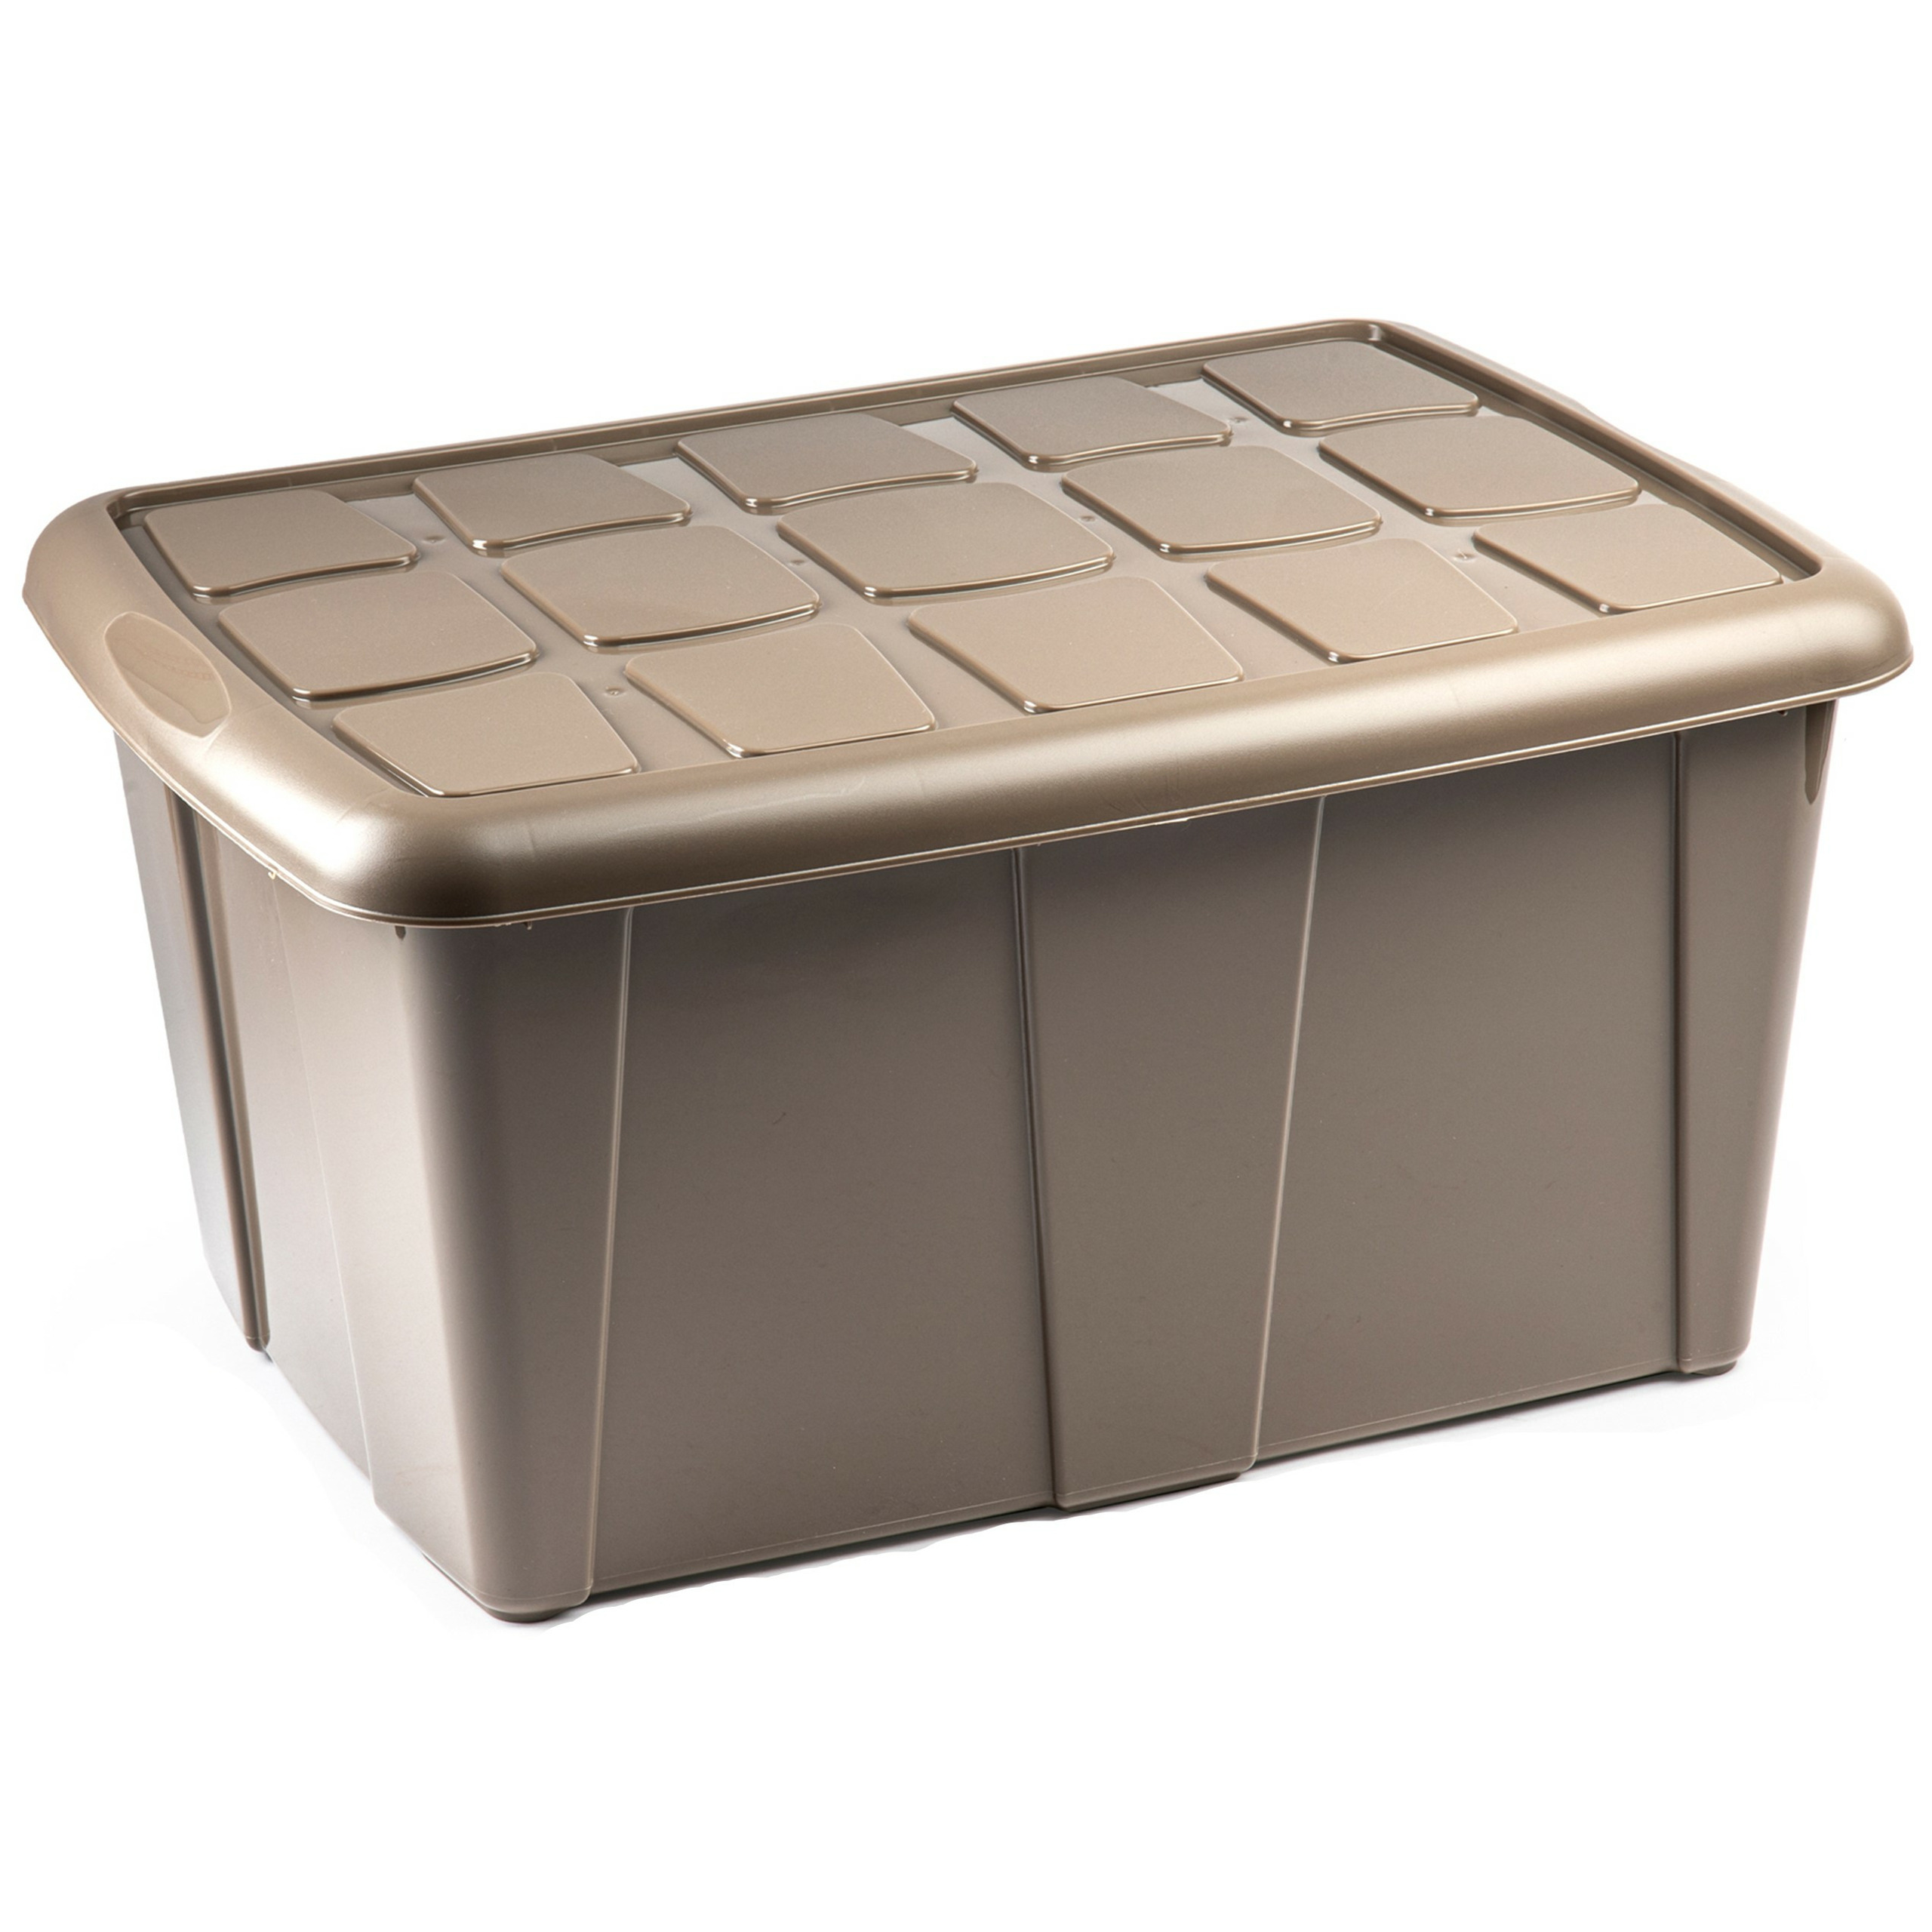 Opslagbox kist van 60 liter met deksel Beige kunststof 63 x 46 x 32 cm